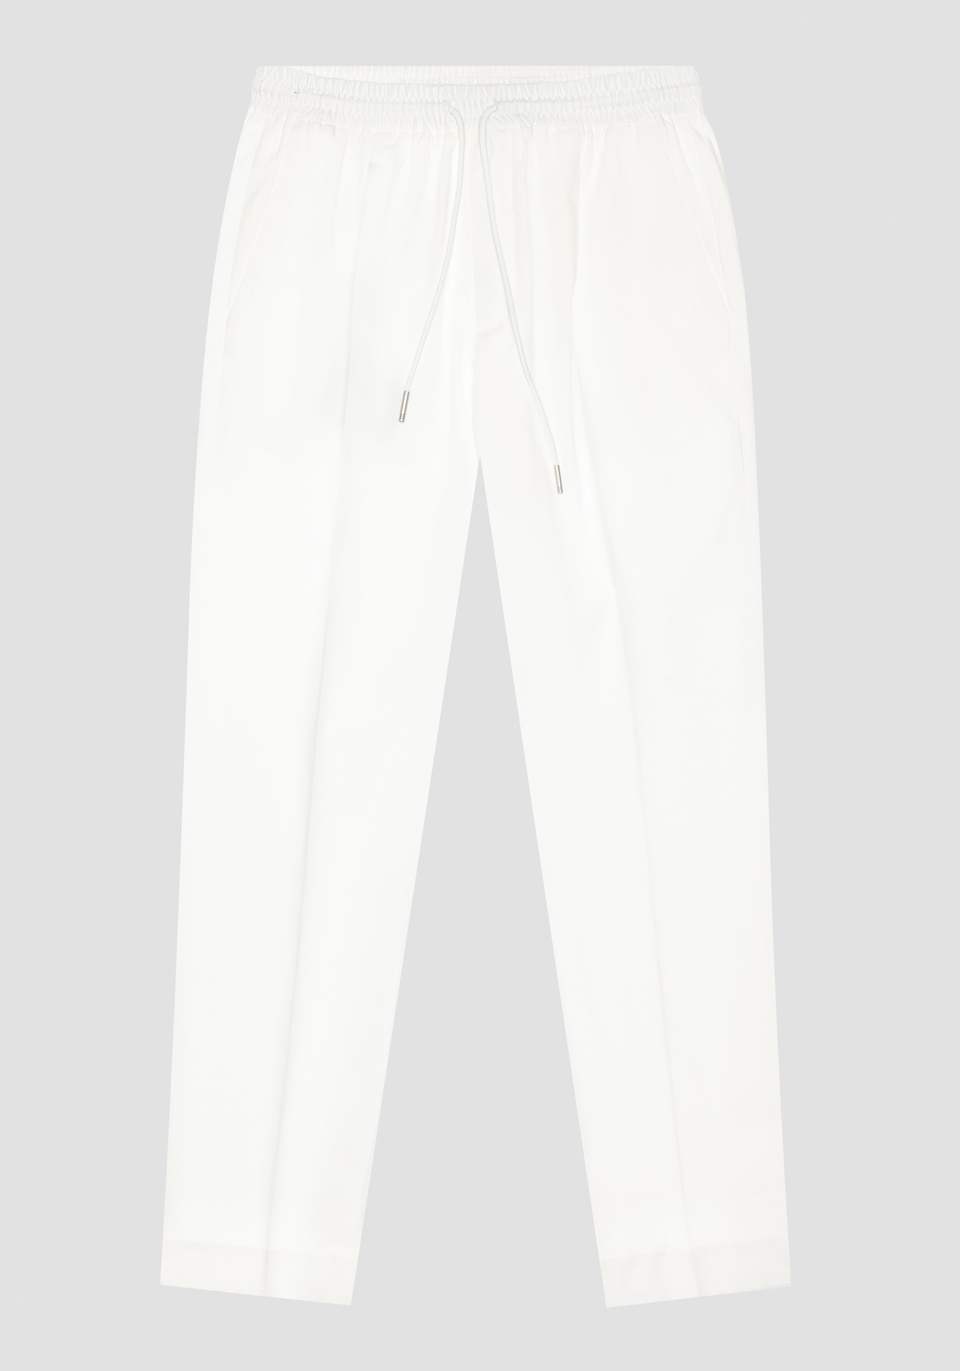 REGULAR FIT "NEIL" PANTS IN FLAMED COTTON BLEND - Antony Morato Online Shop